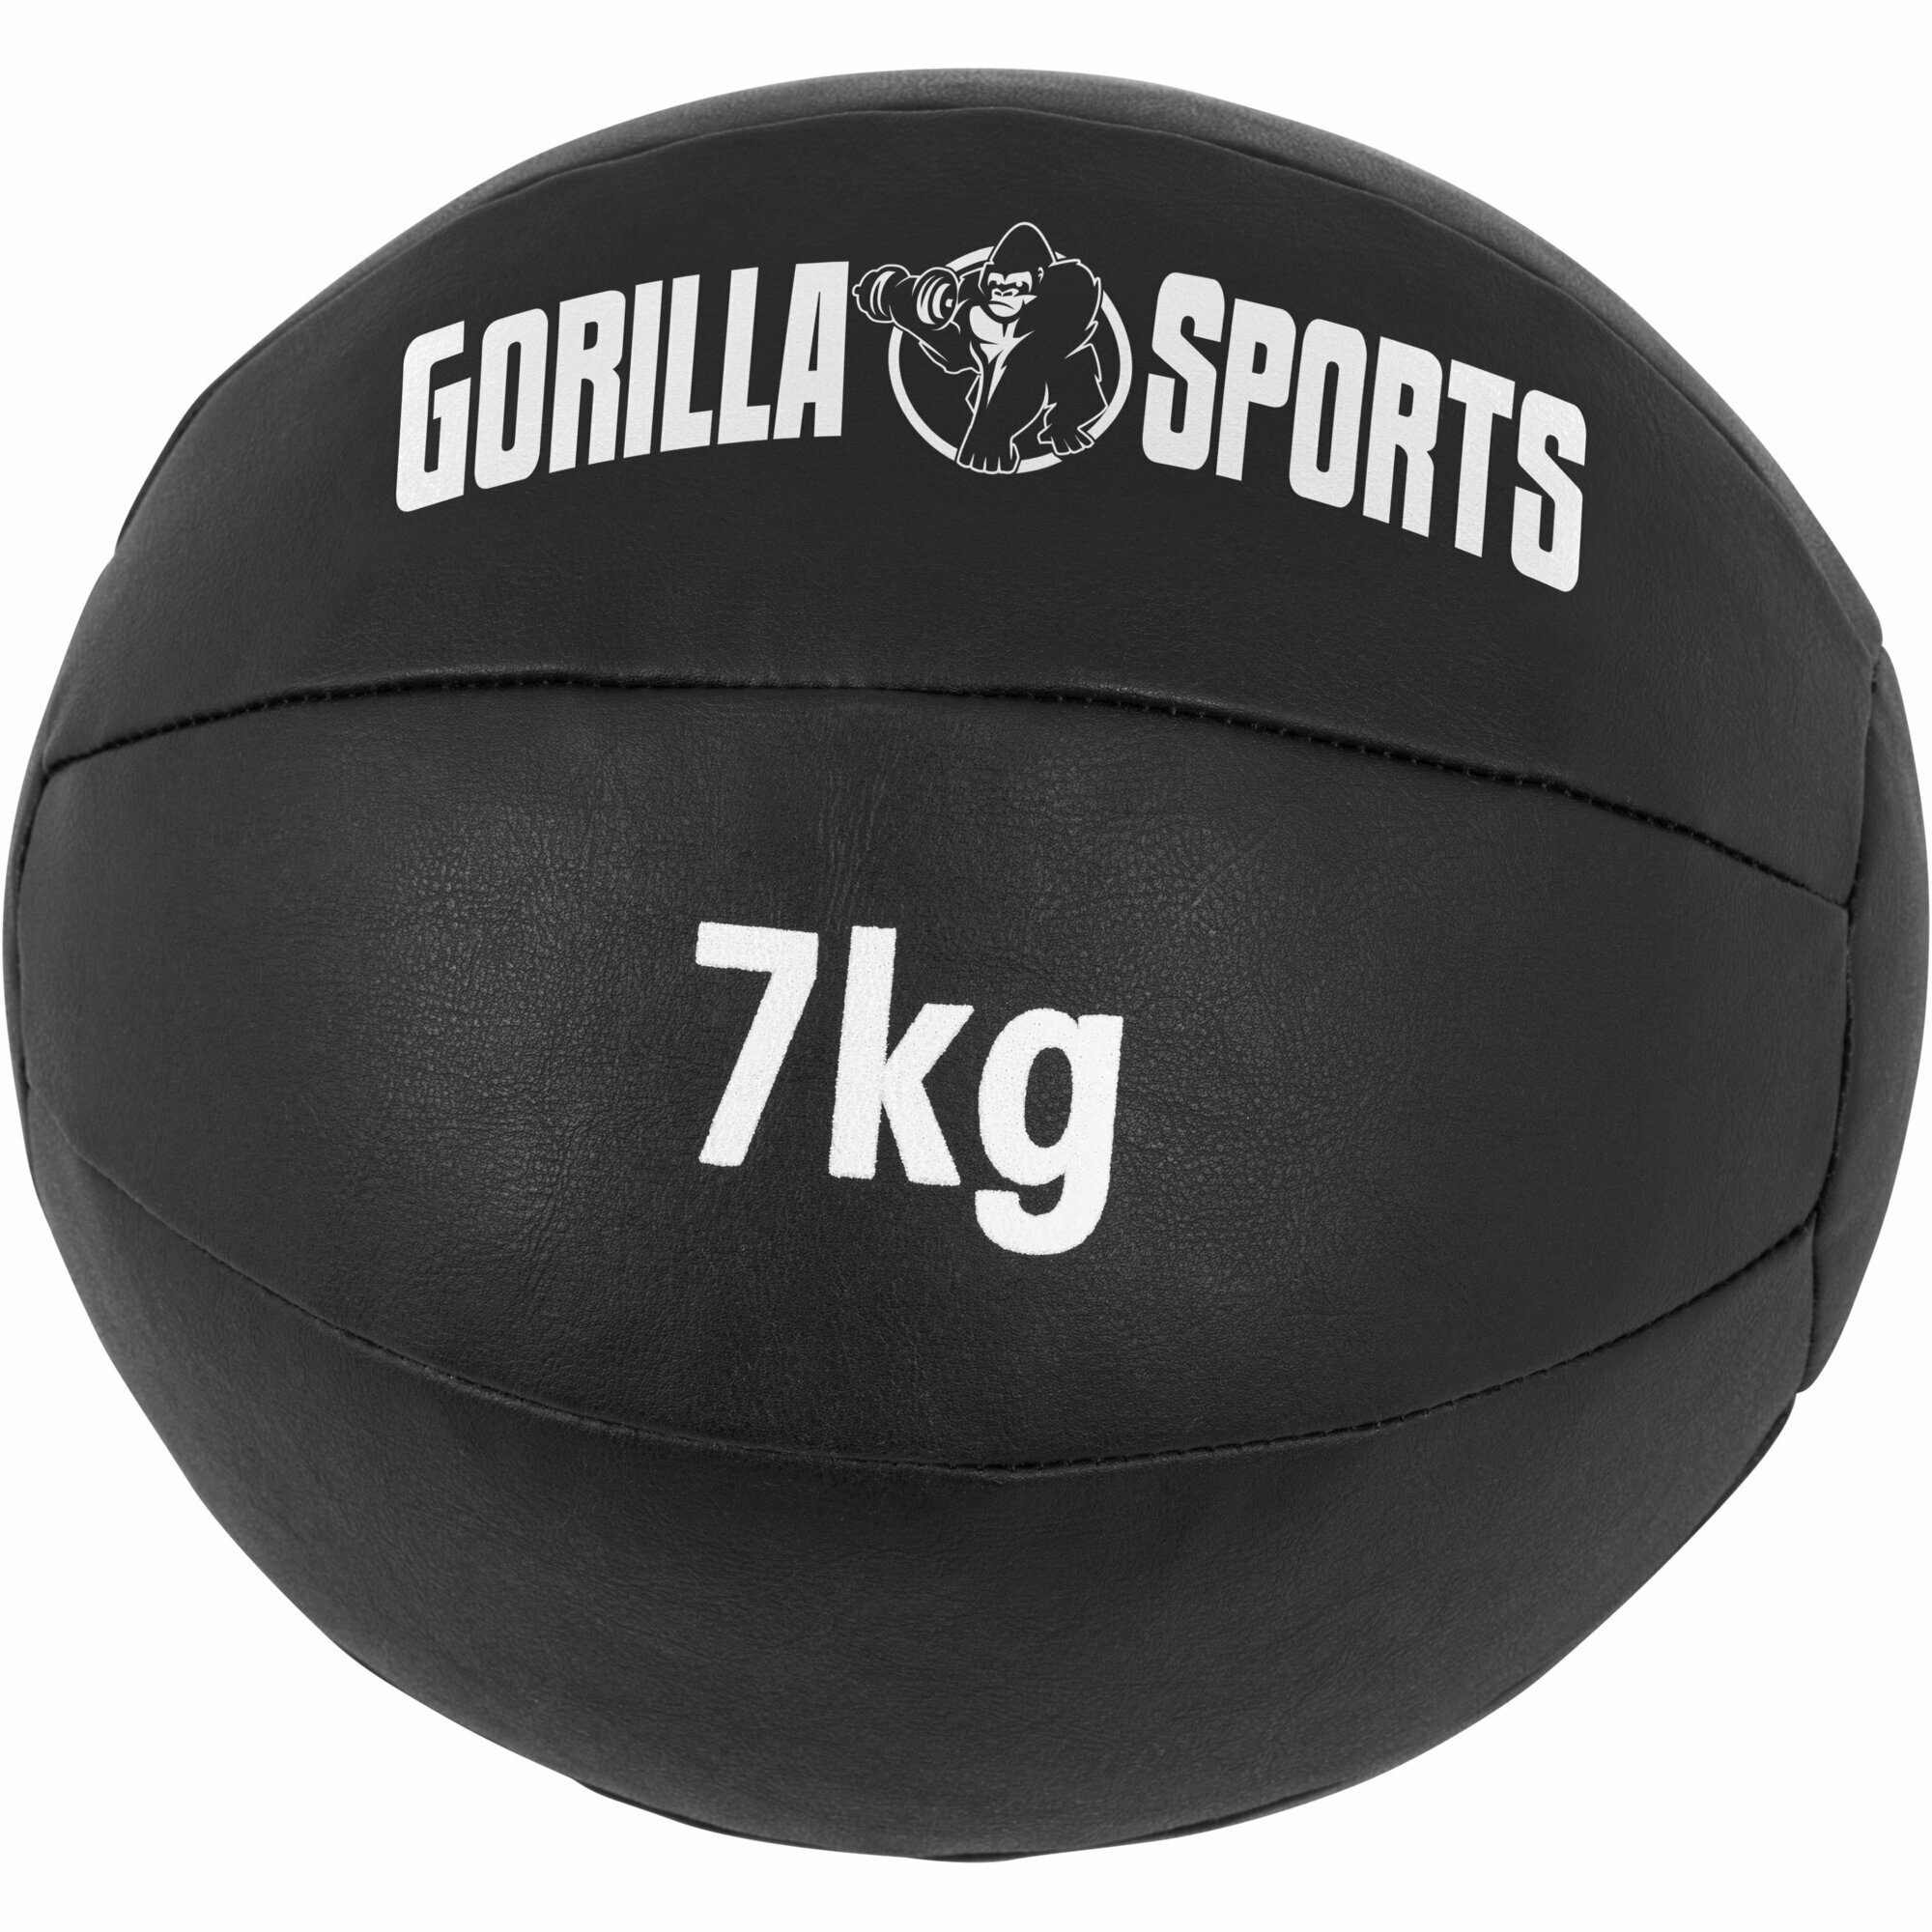 29cm, GORILLA aus 7 Gewichtsball SPORTS kg Trainingsball, Fitnessball, Einzeln/Set, Medizinball Leder,